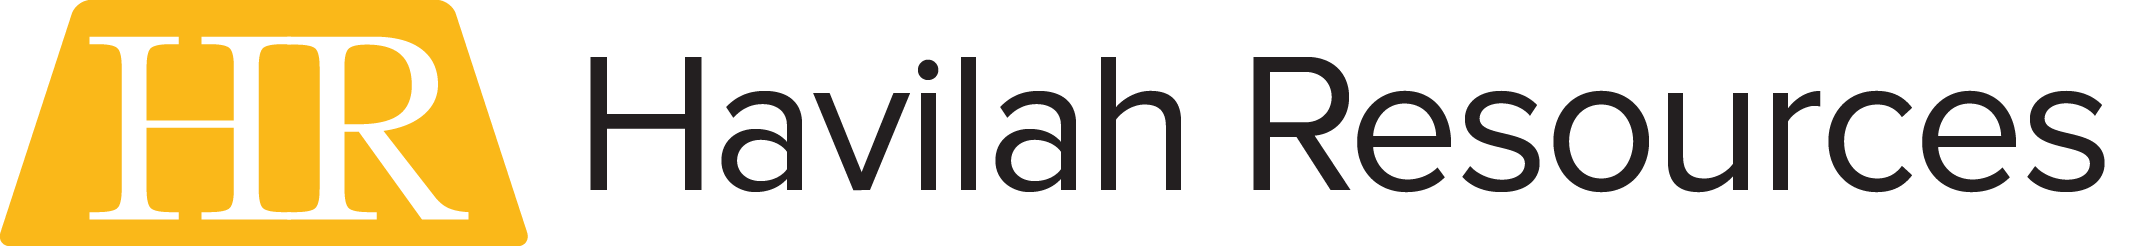 Havilah Resources Limited (HAV:ASX) logo